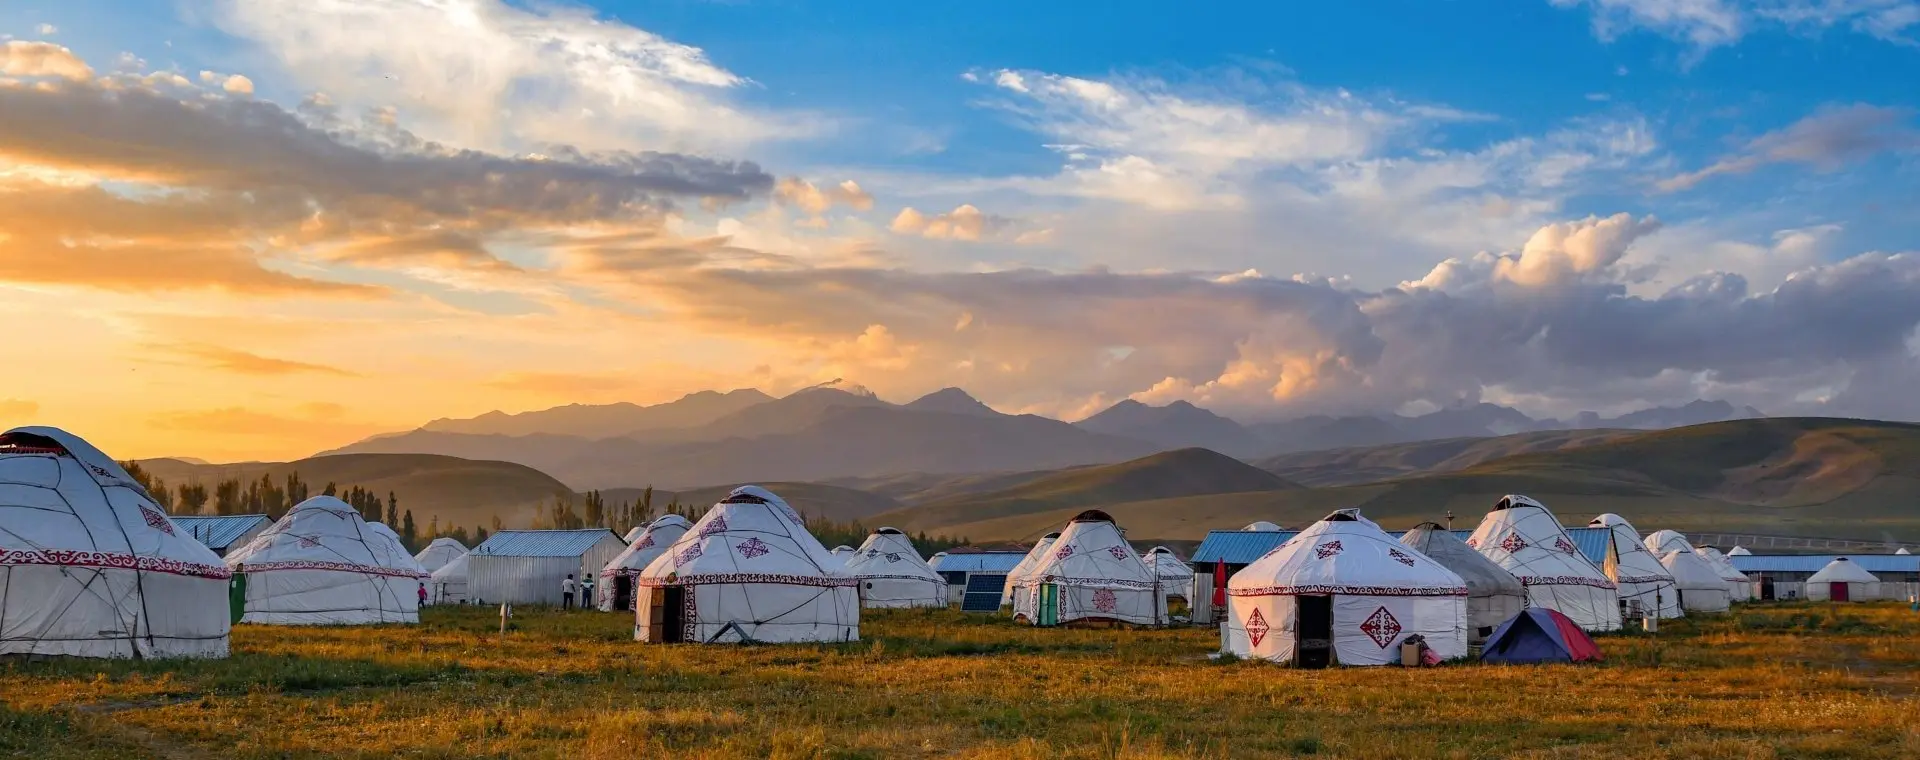 Dorf aus mongolischen Jurten